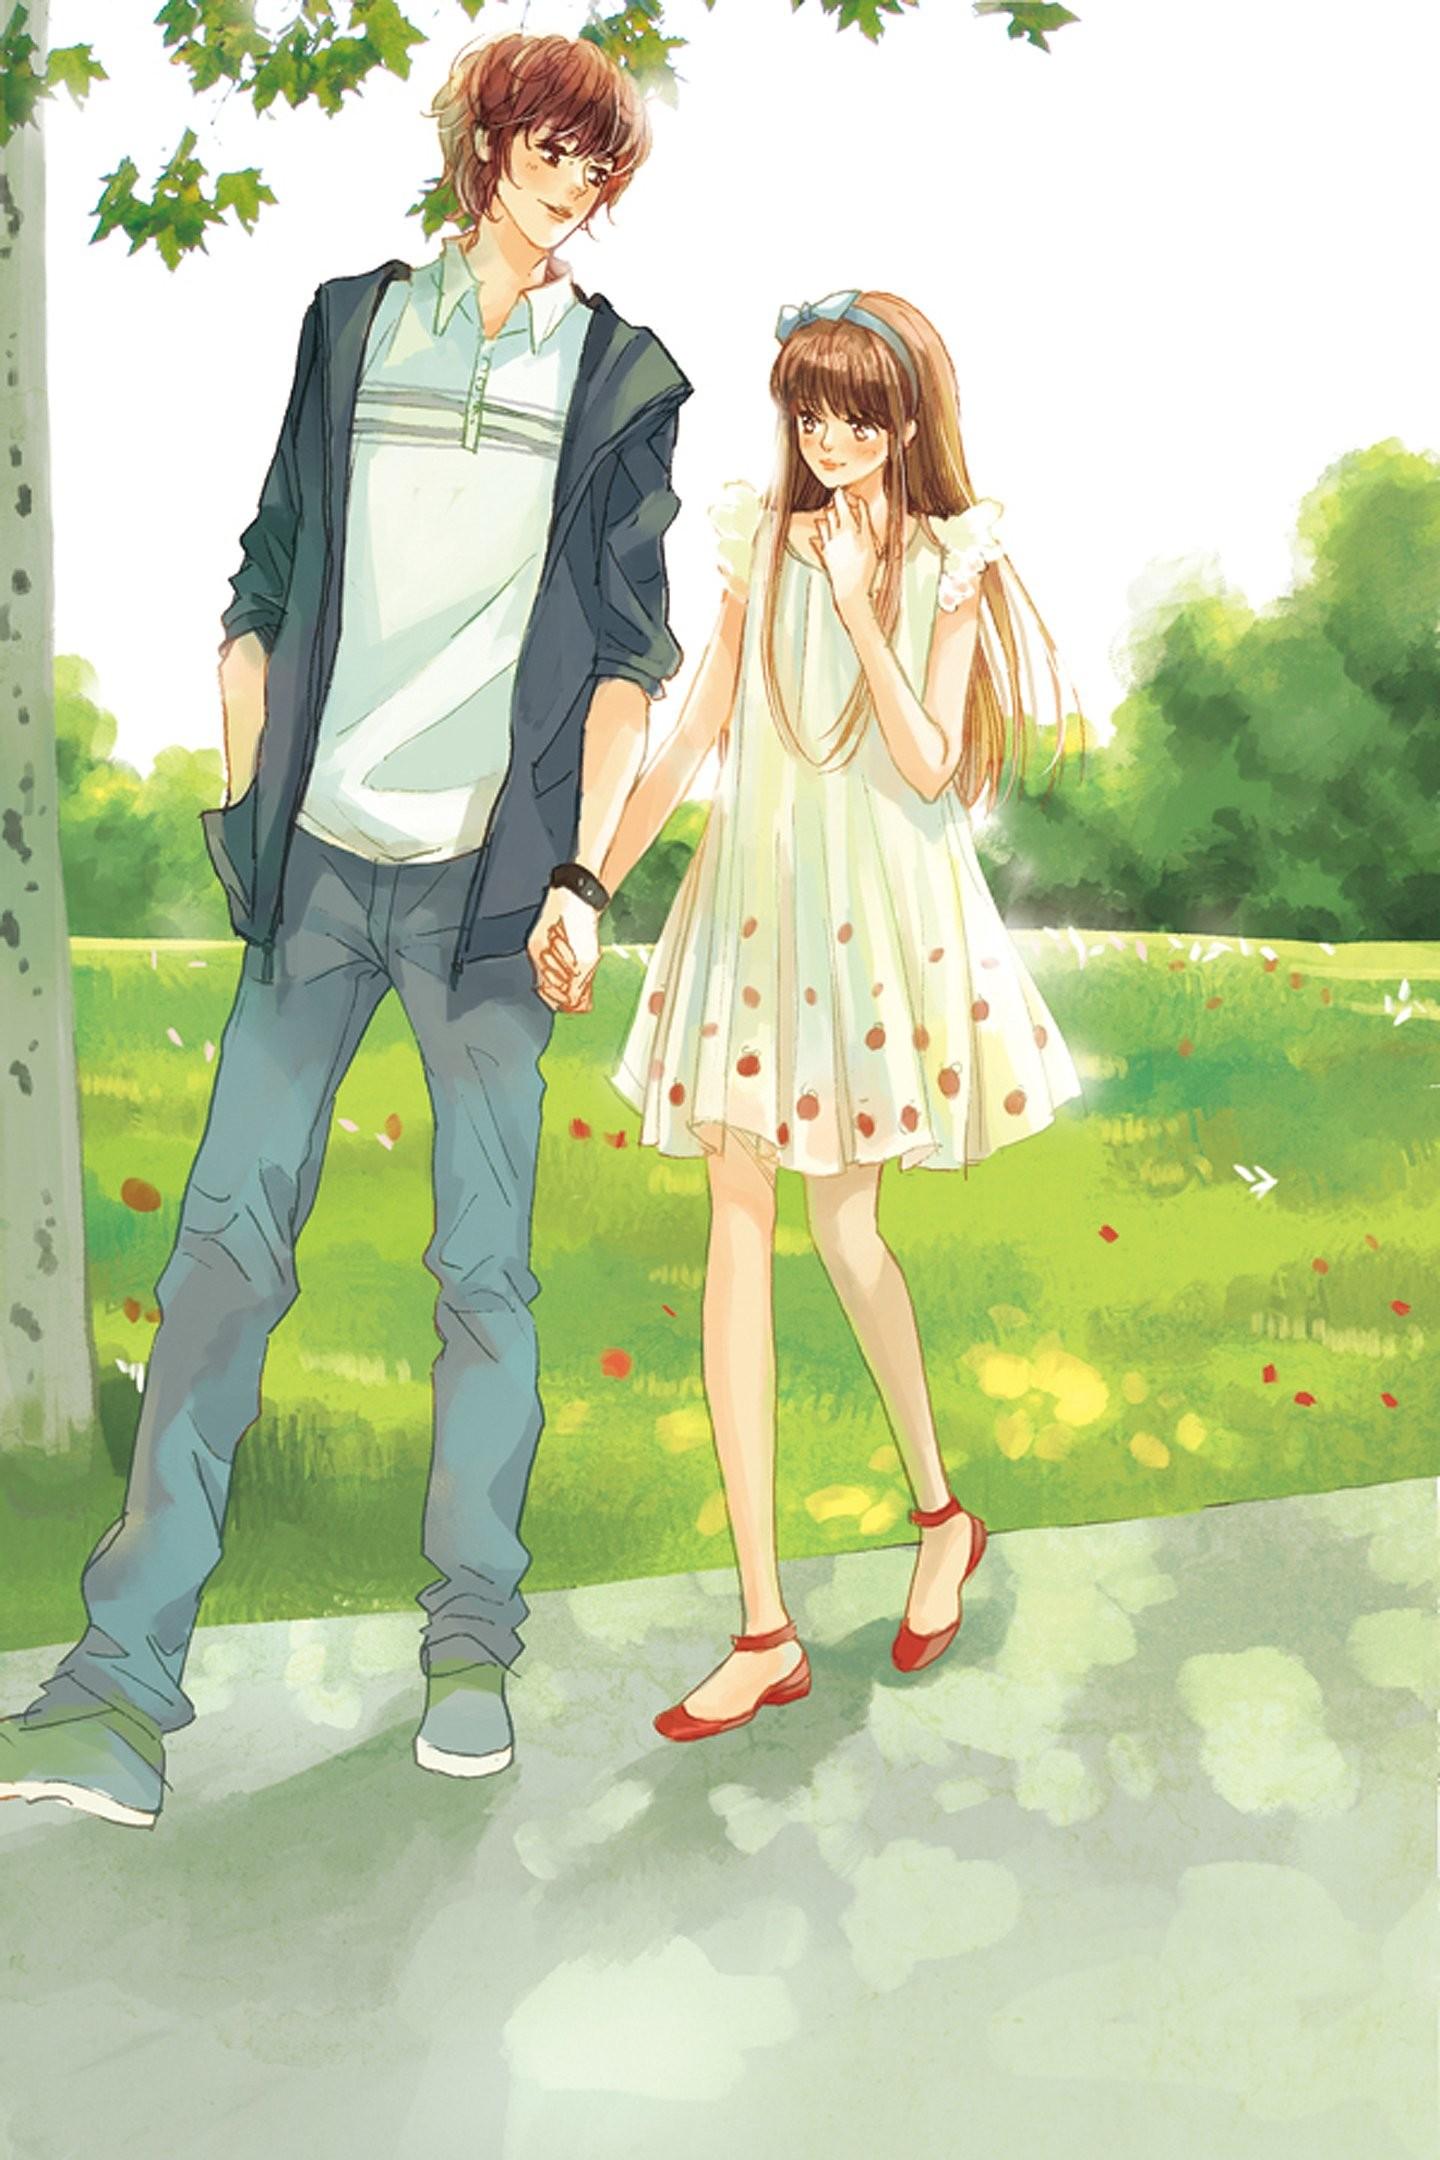 Wallpapers Anime Couple